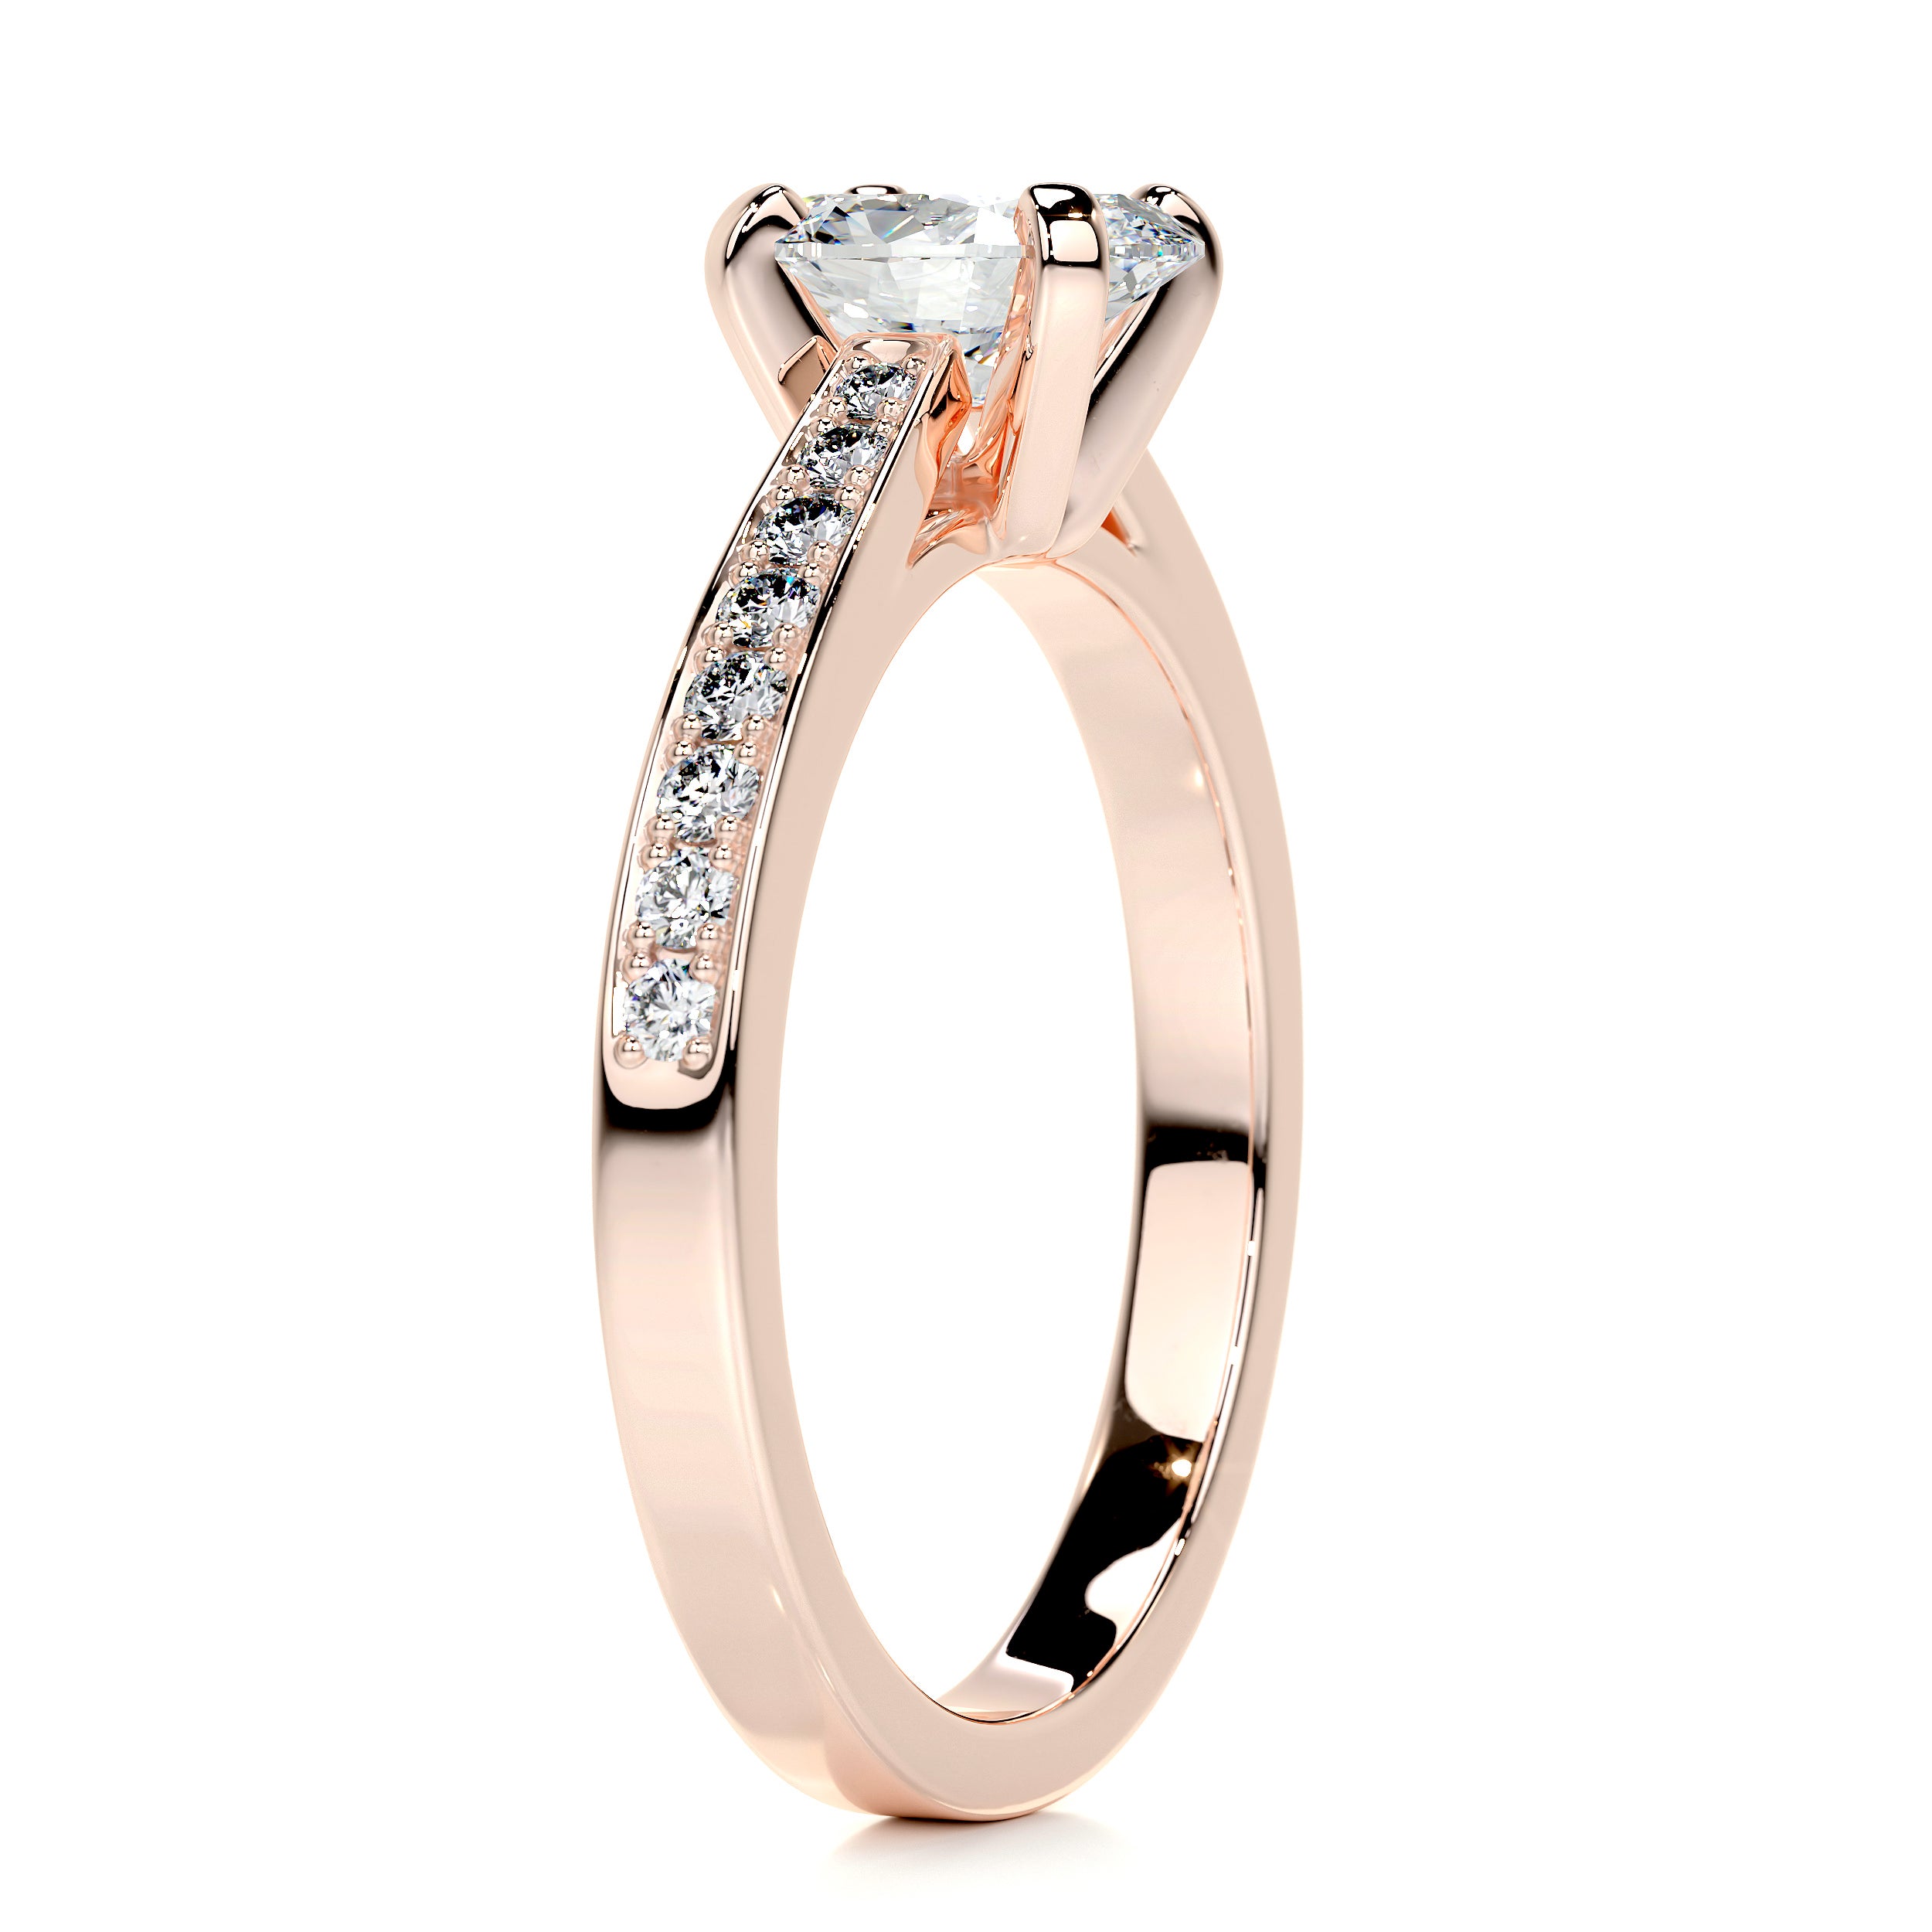 Talia Diamond Engagement Ring   (1 Carat) -14K Rose Gold